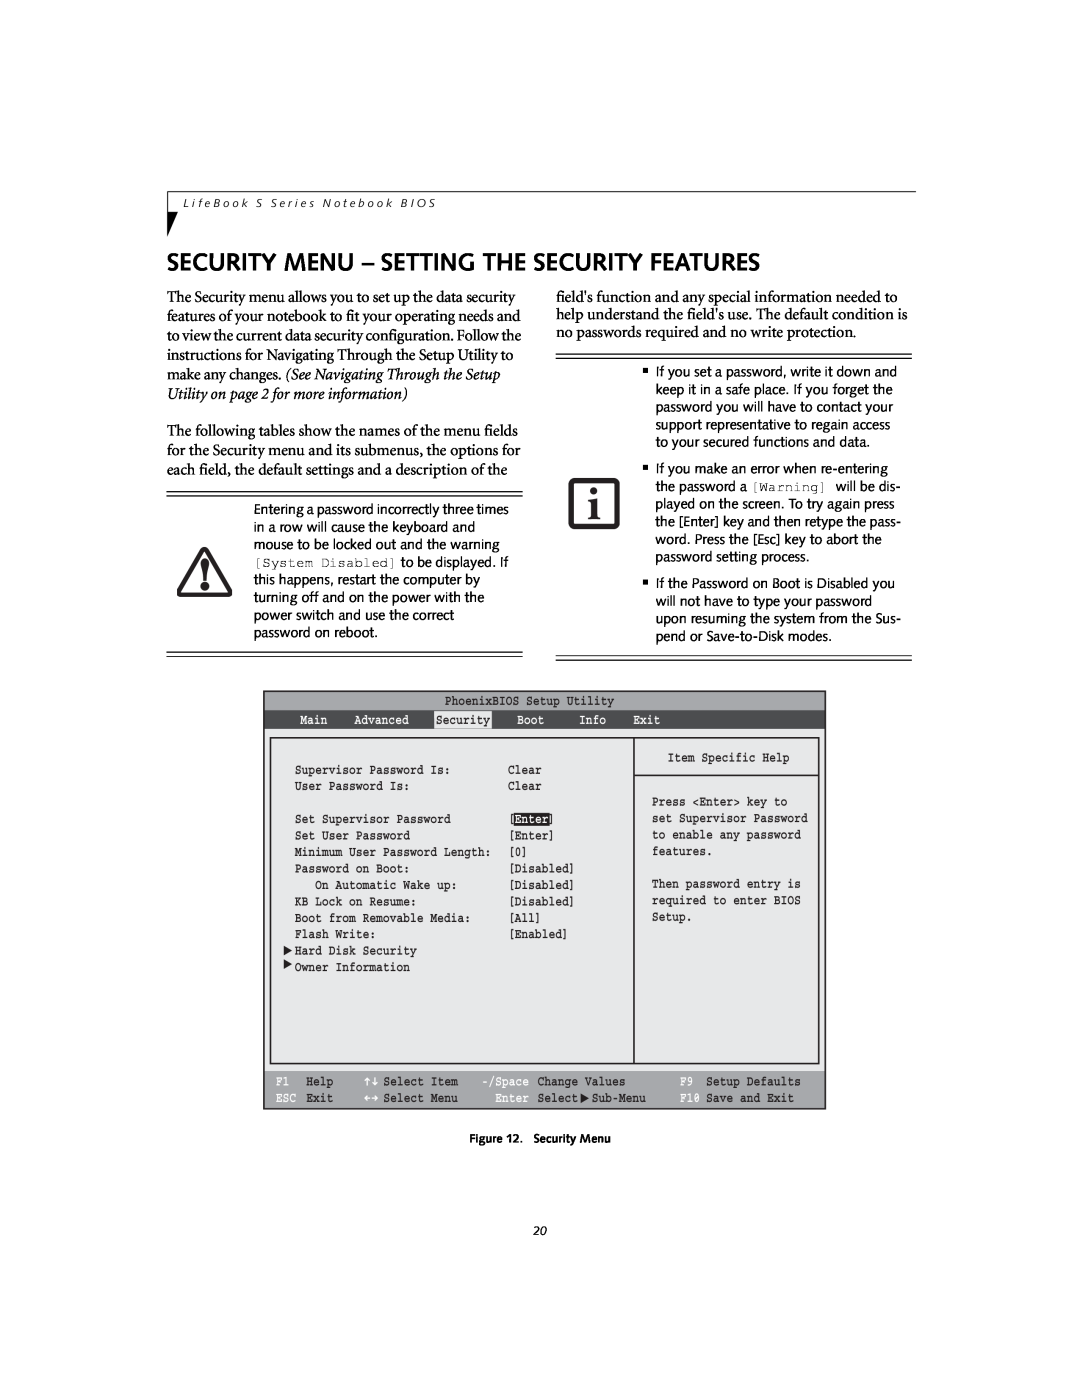 Fujitsu Siemens Computers S2110 manual Security Menu - Setting The Security Features 